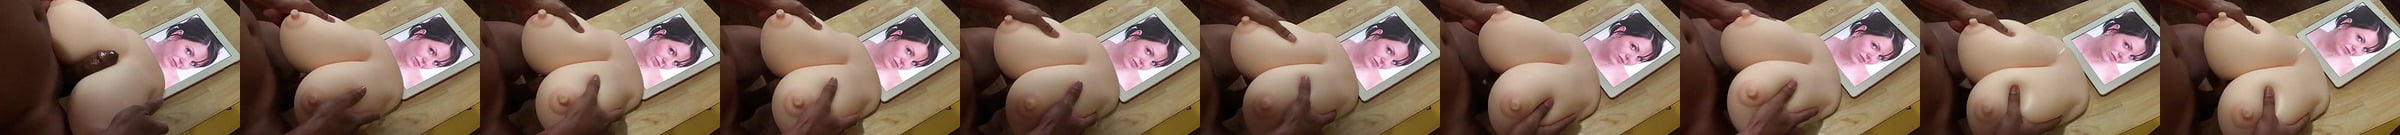 Yl150 Sex Doll On Her Back Boob Play Free Man Hd Porn A9 Xhamster